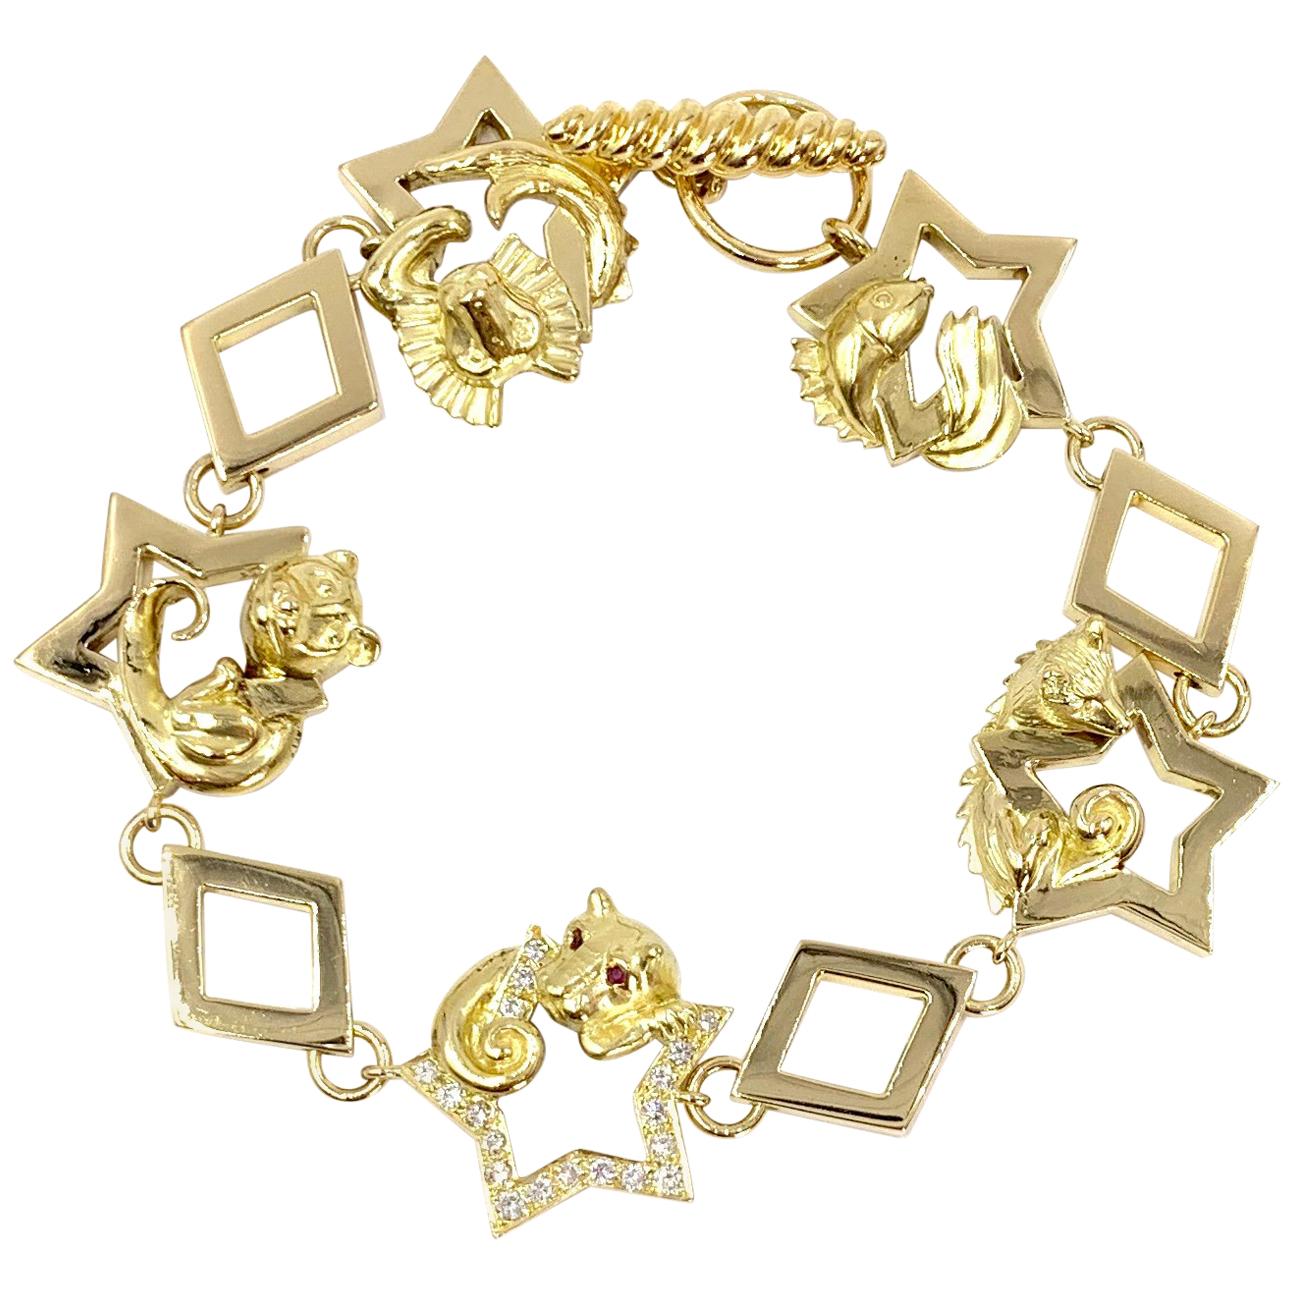 18 Karat Vintage Star Animal Charm Bracelet with Diamonds and Rubies